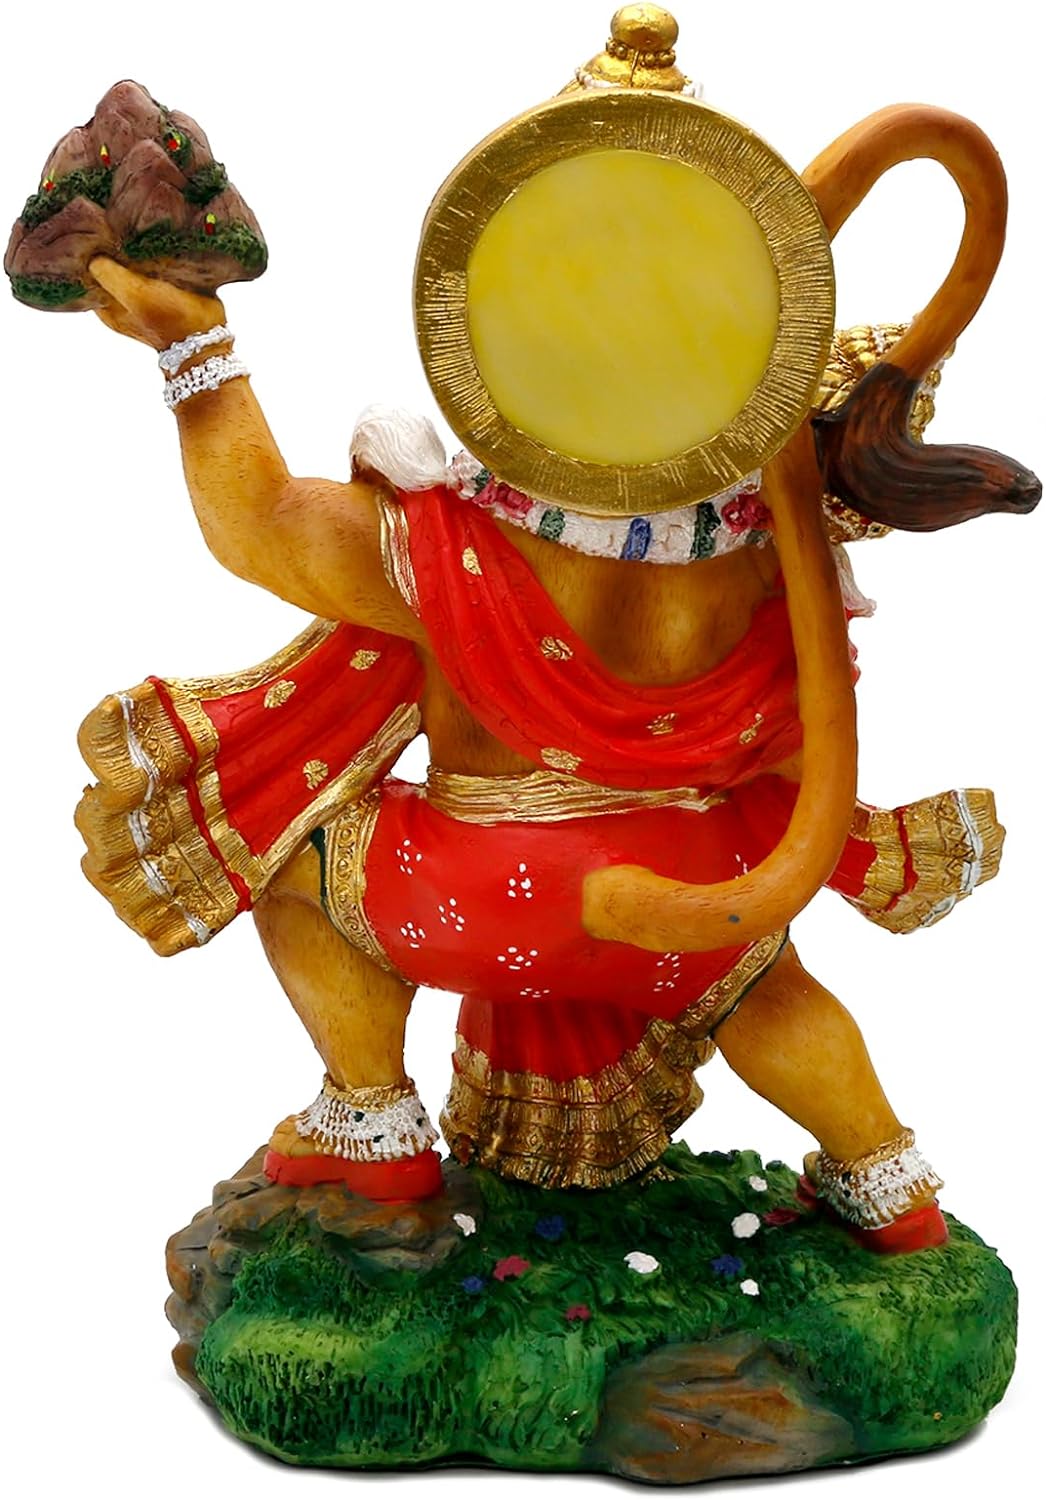 Hindu God Flying Hanuman Statue - 9.2”H Jayanti Murti Pooja Item Diwali Gift for Indian Friend Family Altar Puja Item Home Office Temple Mandir Shrine Yoga Meditation Room Spiritual Decoration